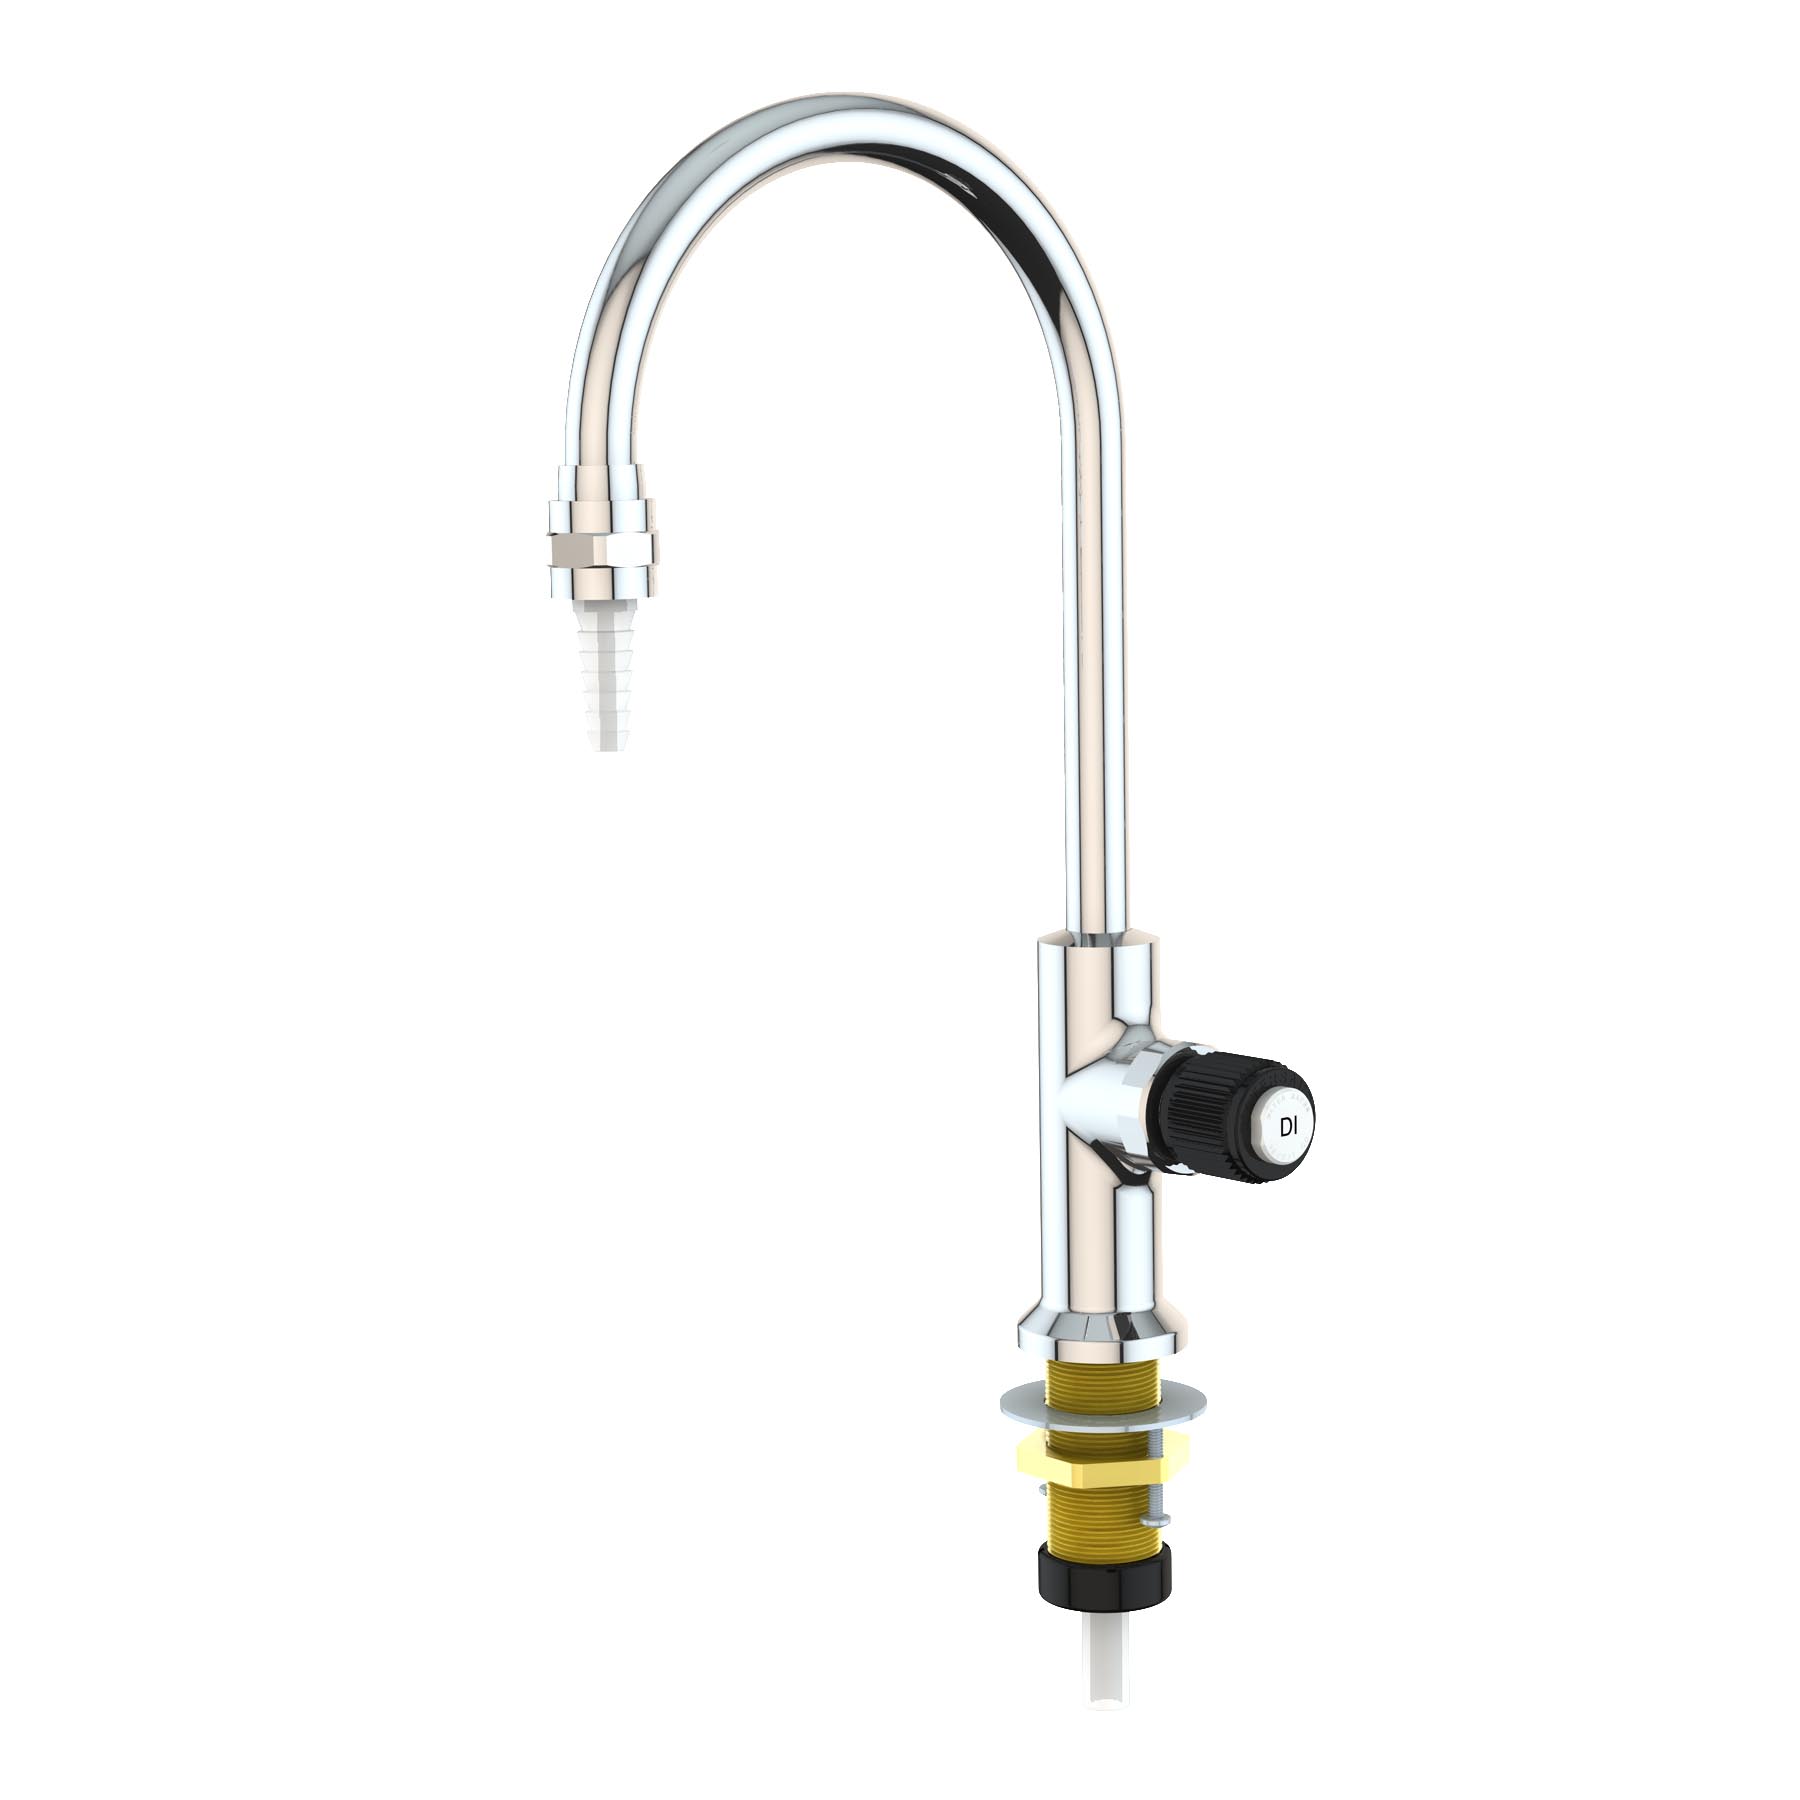 L7853 Watersaver Faucet Co